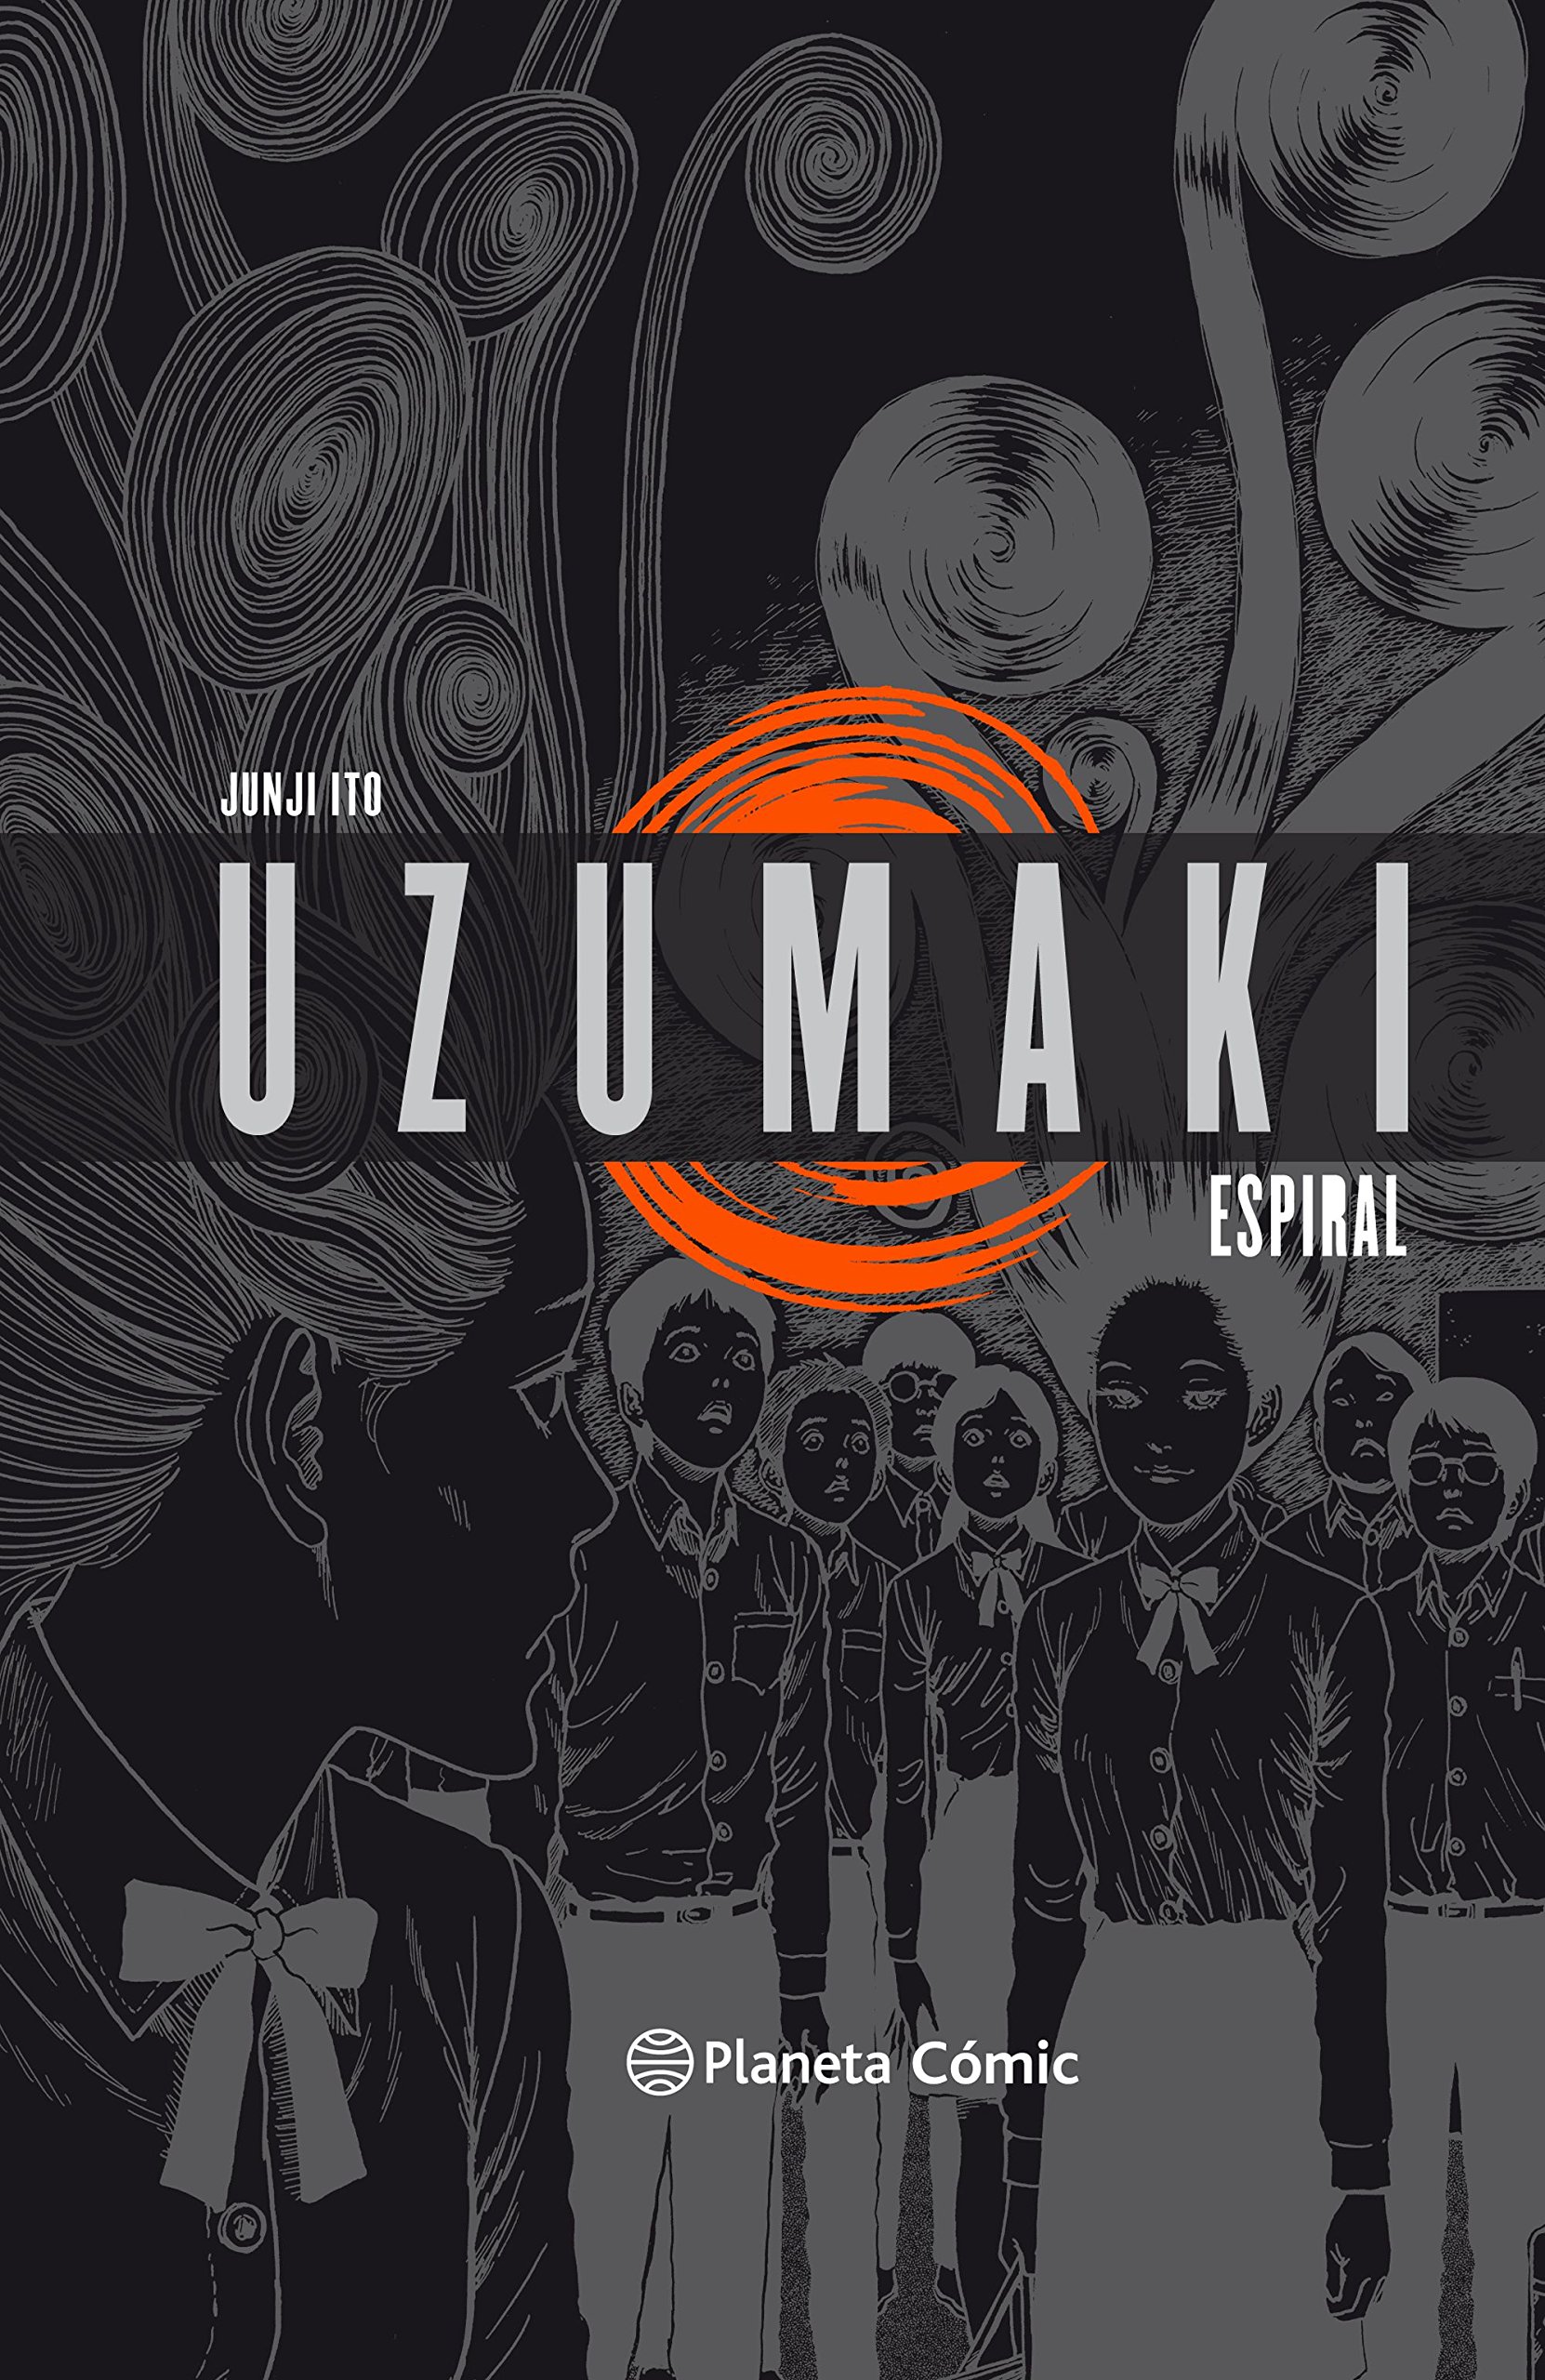 Junji Ito: Uzumaki: Espiral (GraphicNovel, Spanish language)